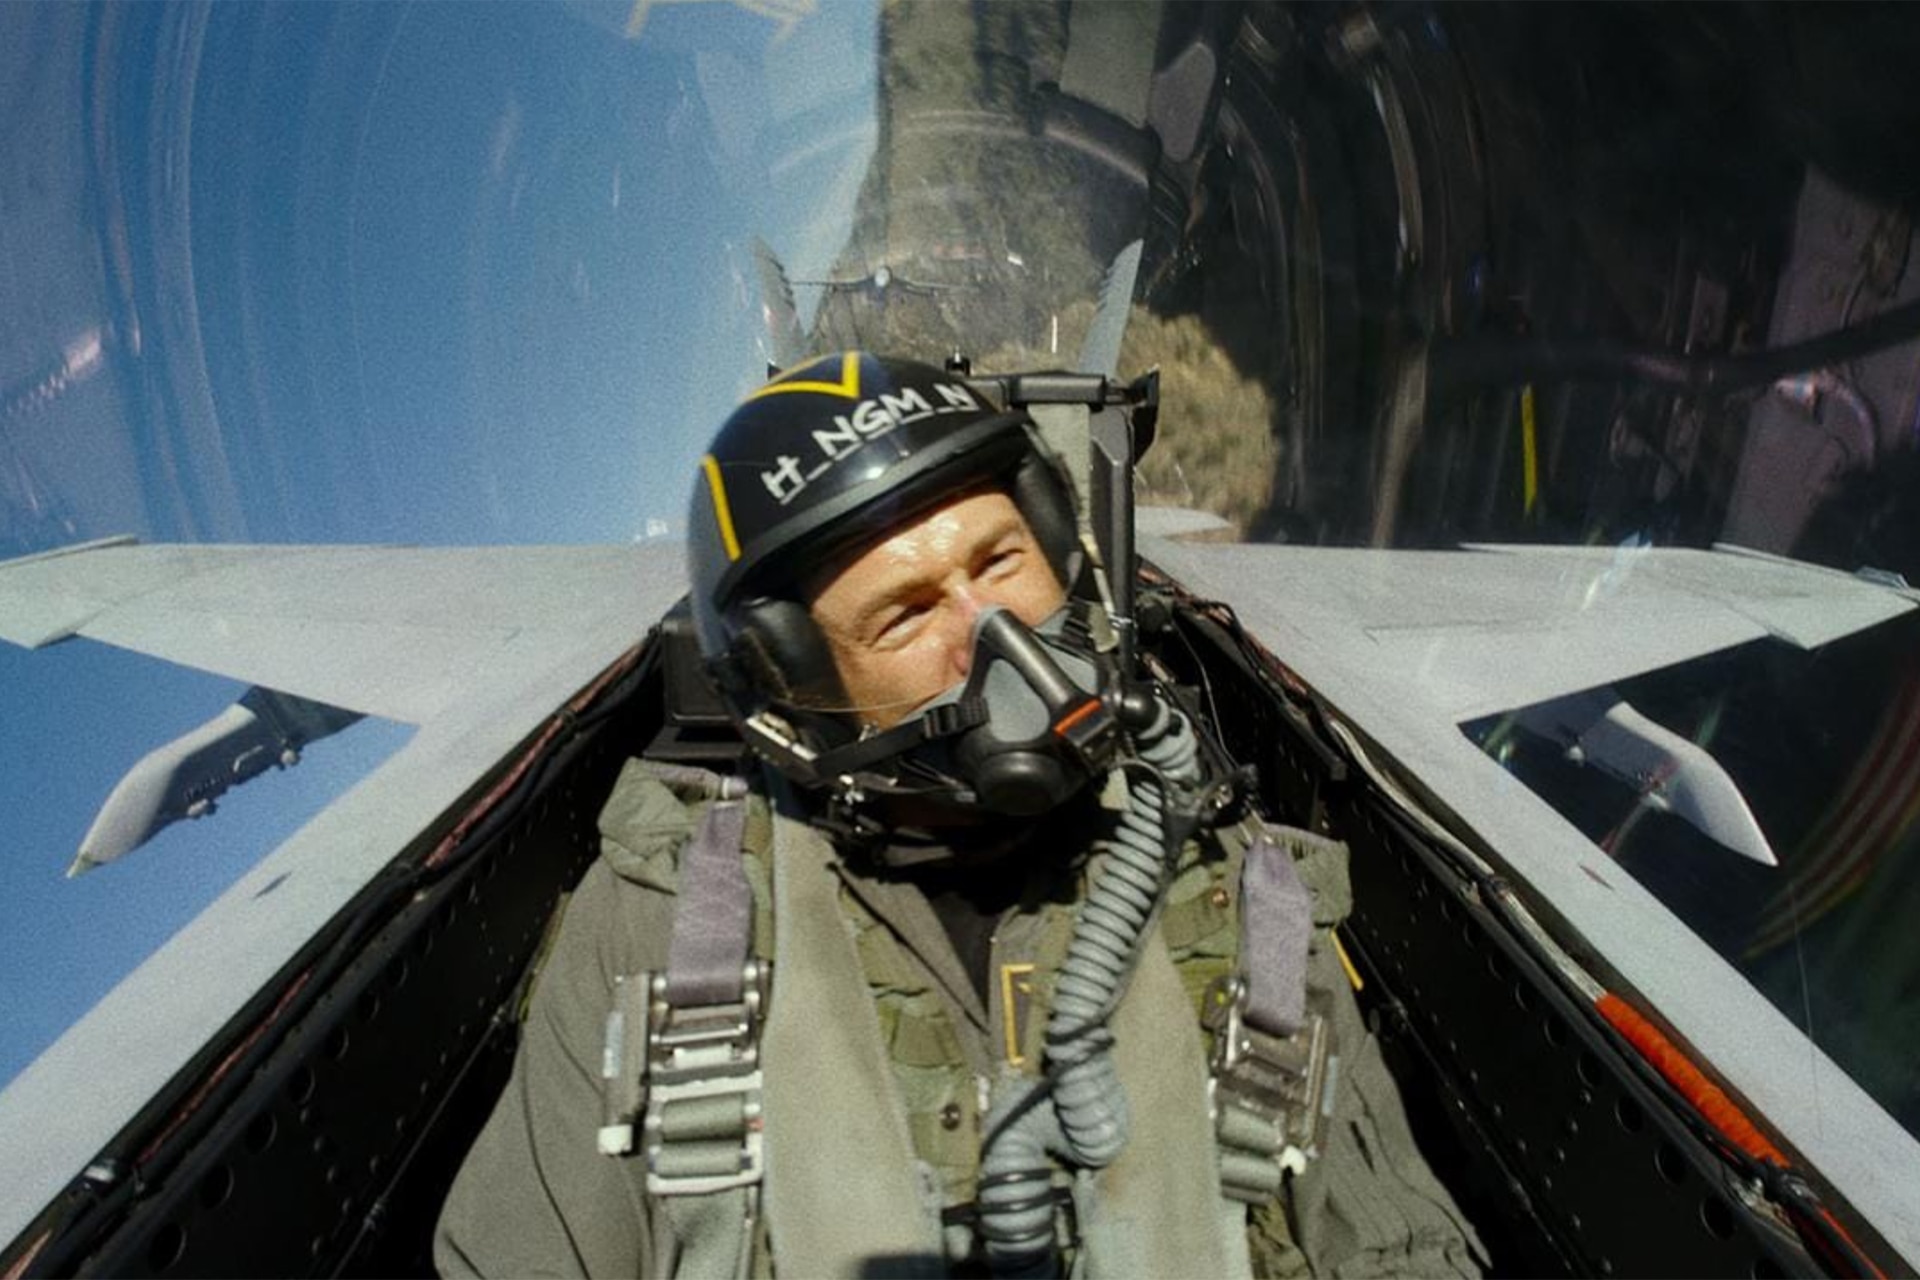 Twenty One Pilots say Tom Cruise fired them from Top Gun Maverick